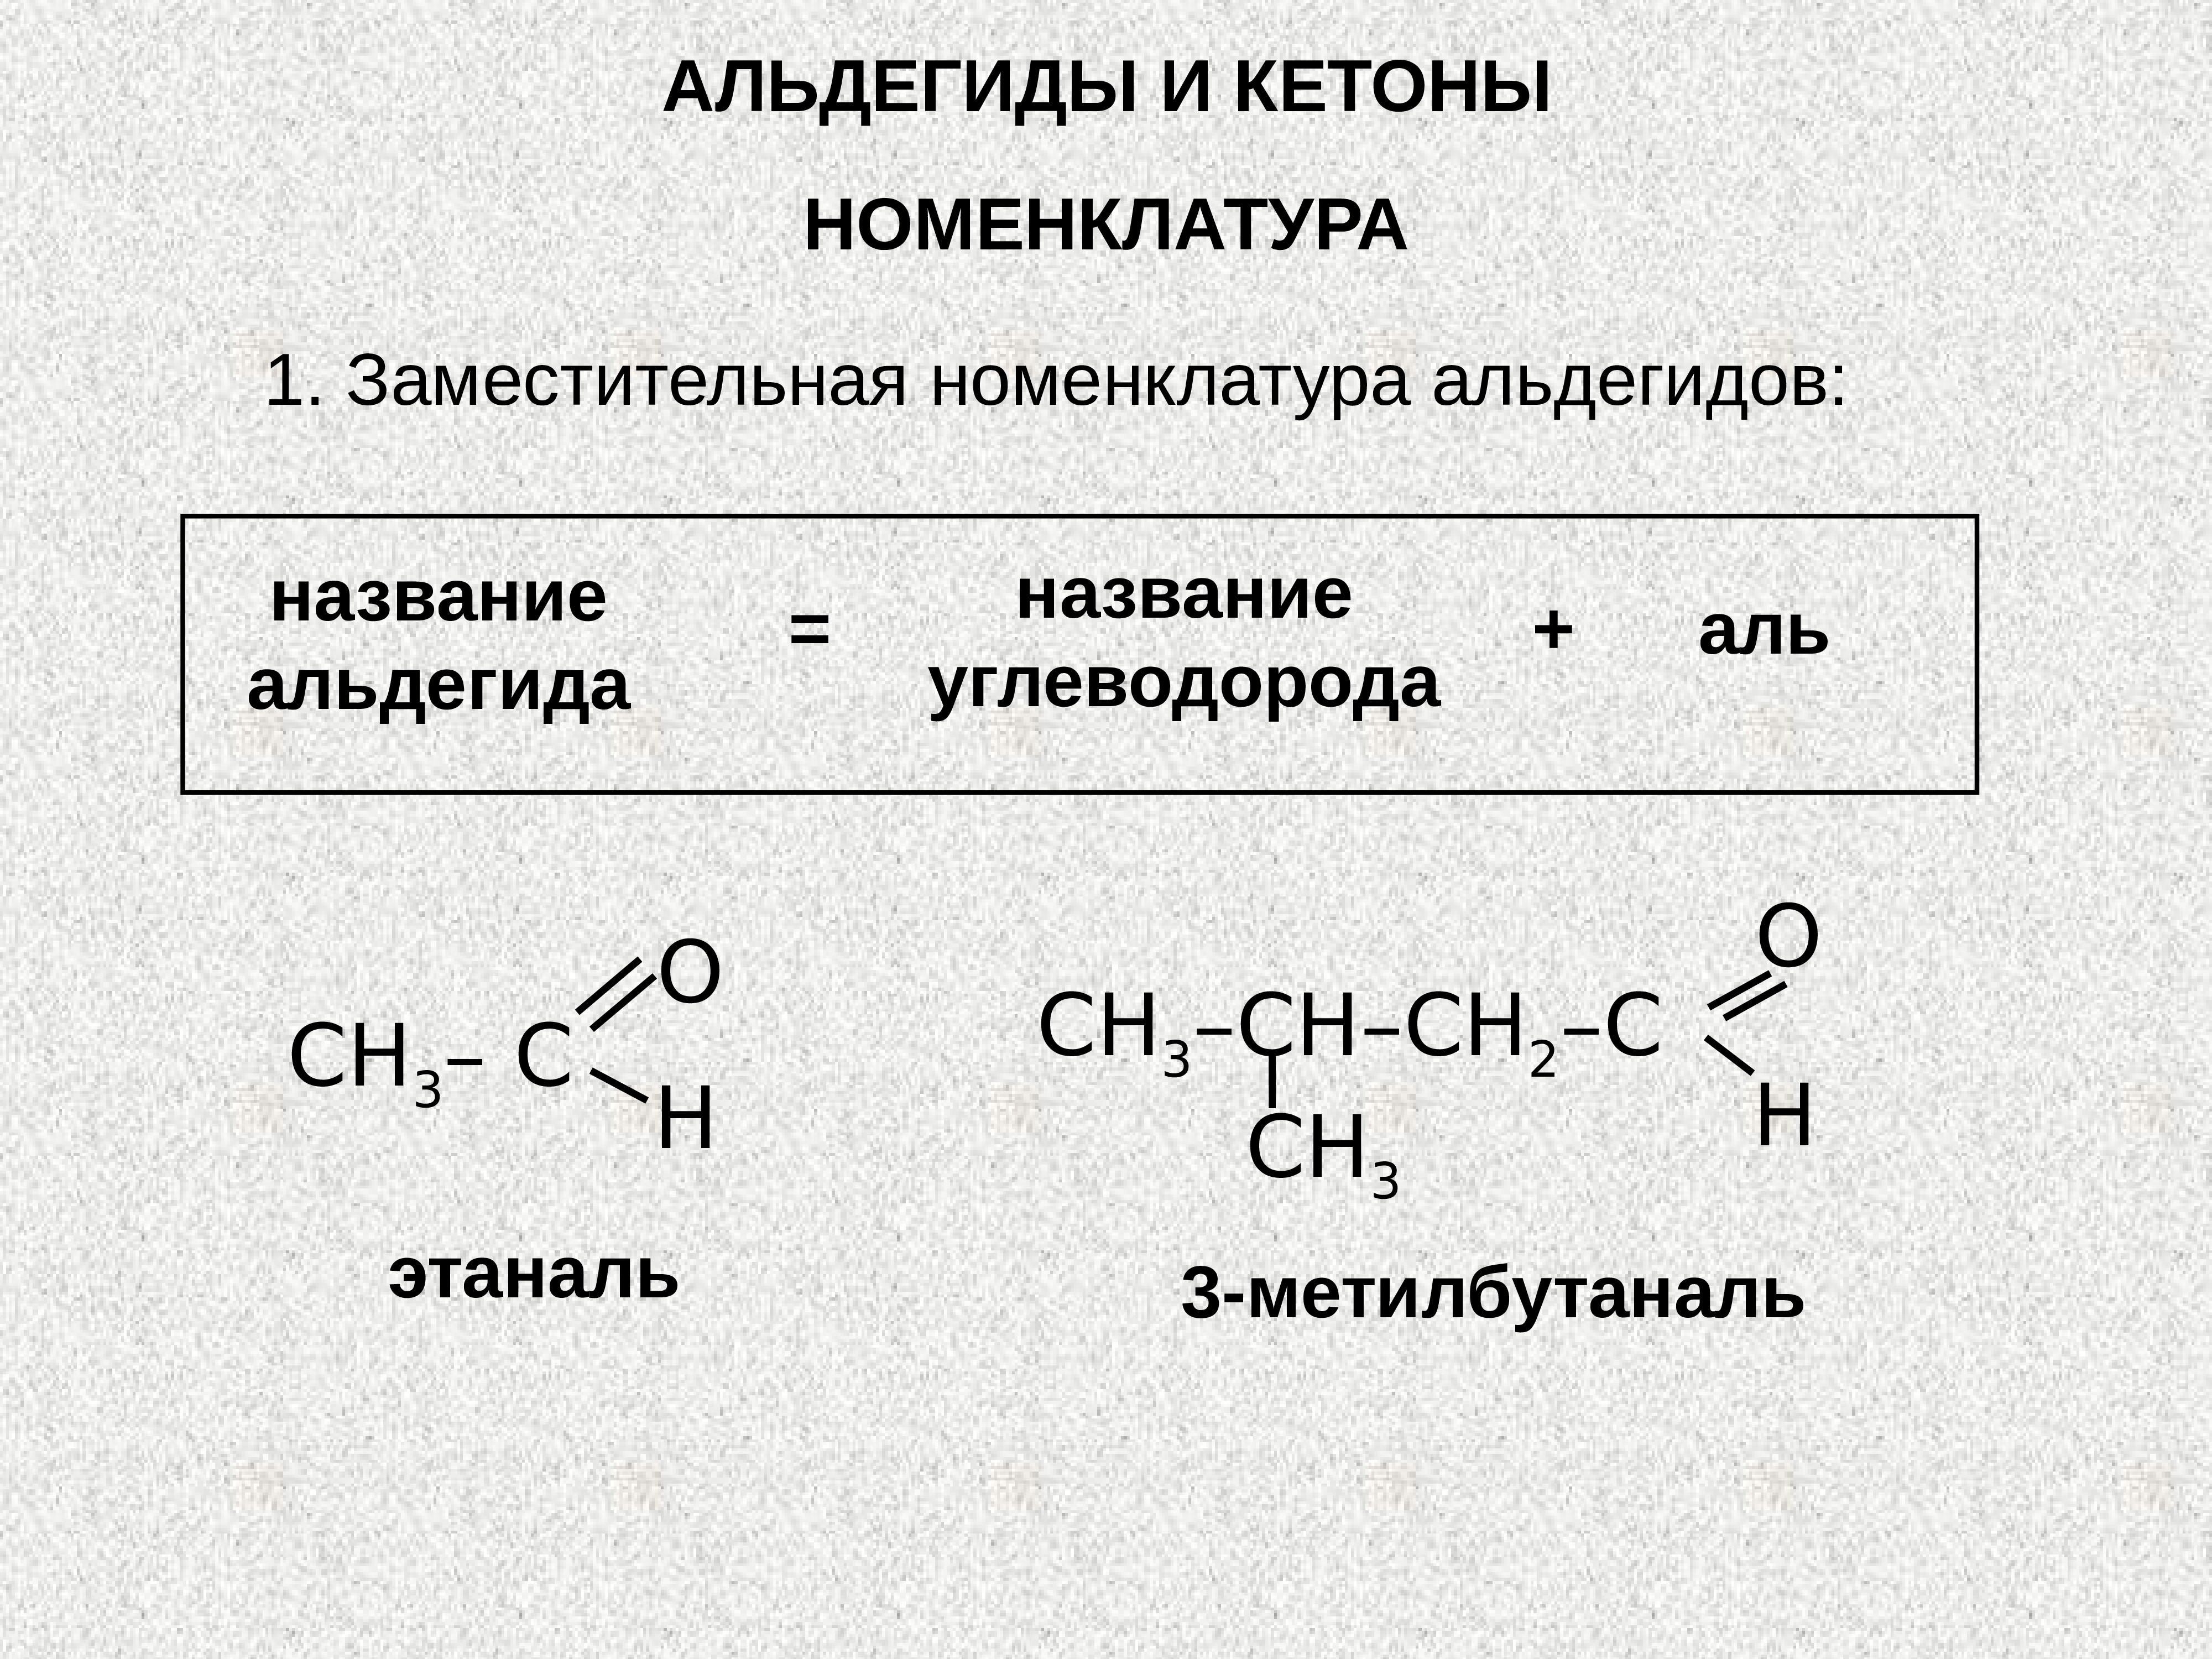 Кетоны названия соединений. Альдегиды и кетоны номенклатура. Альдегиды строение и номенклатура. Кетоны и альдегиды c8h10o. Заместительная номенклатура кетоны.